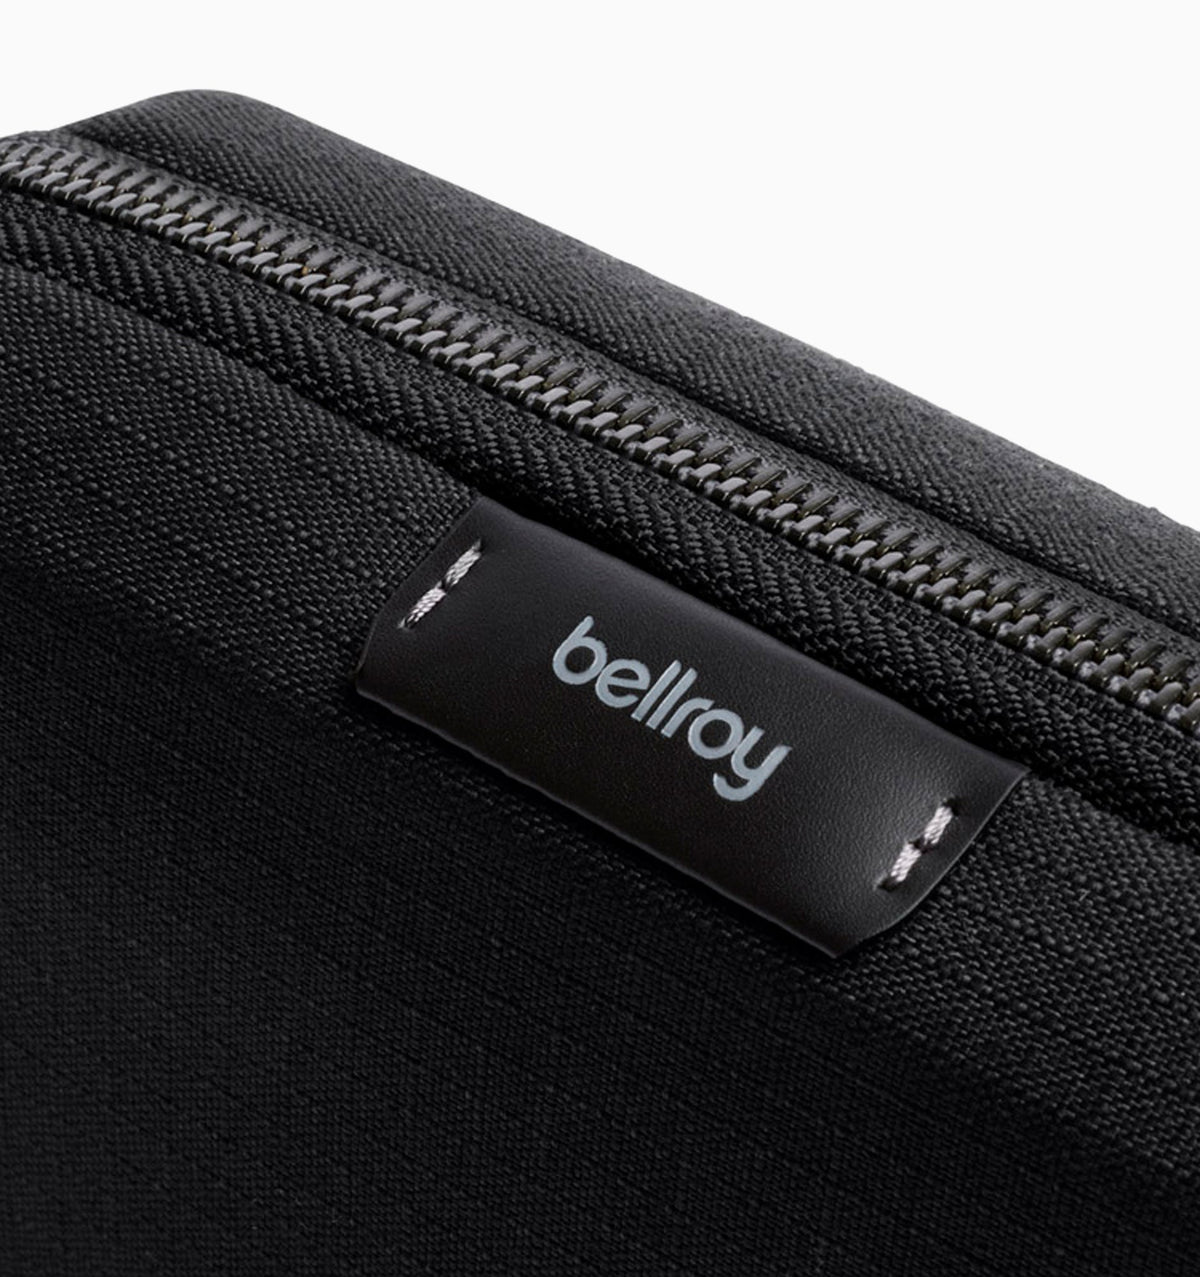 Bellroy Tech Kit Compact - Black